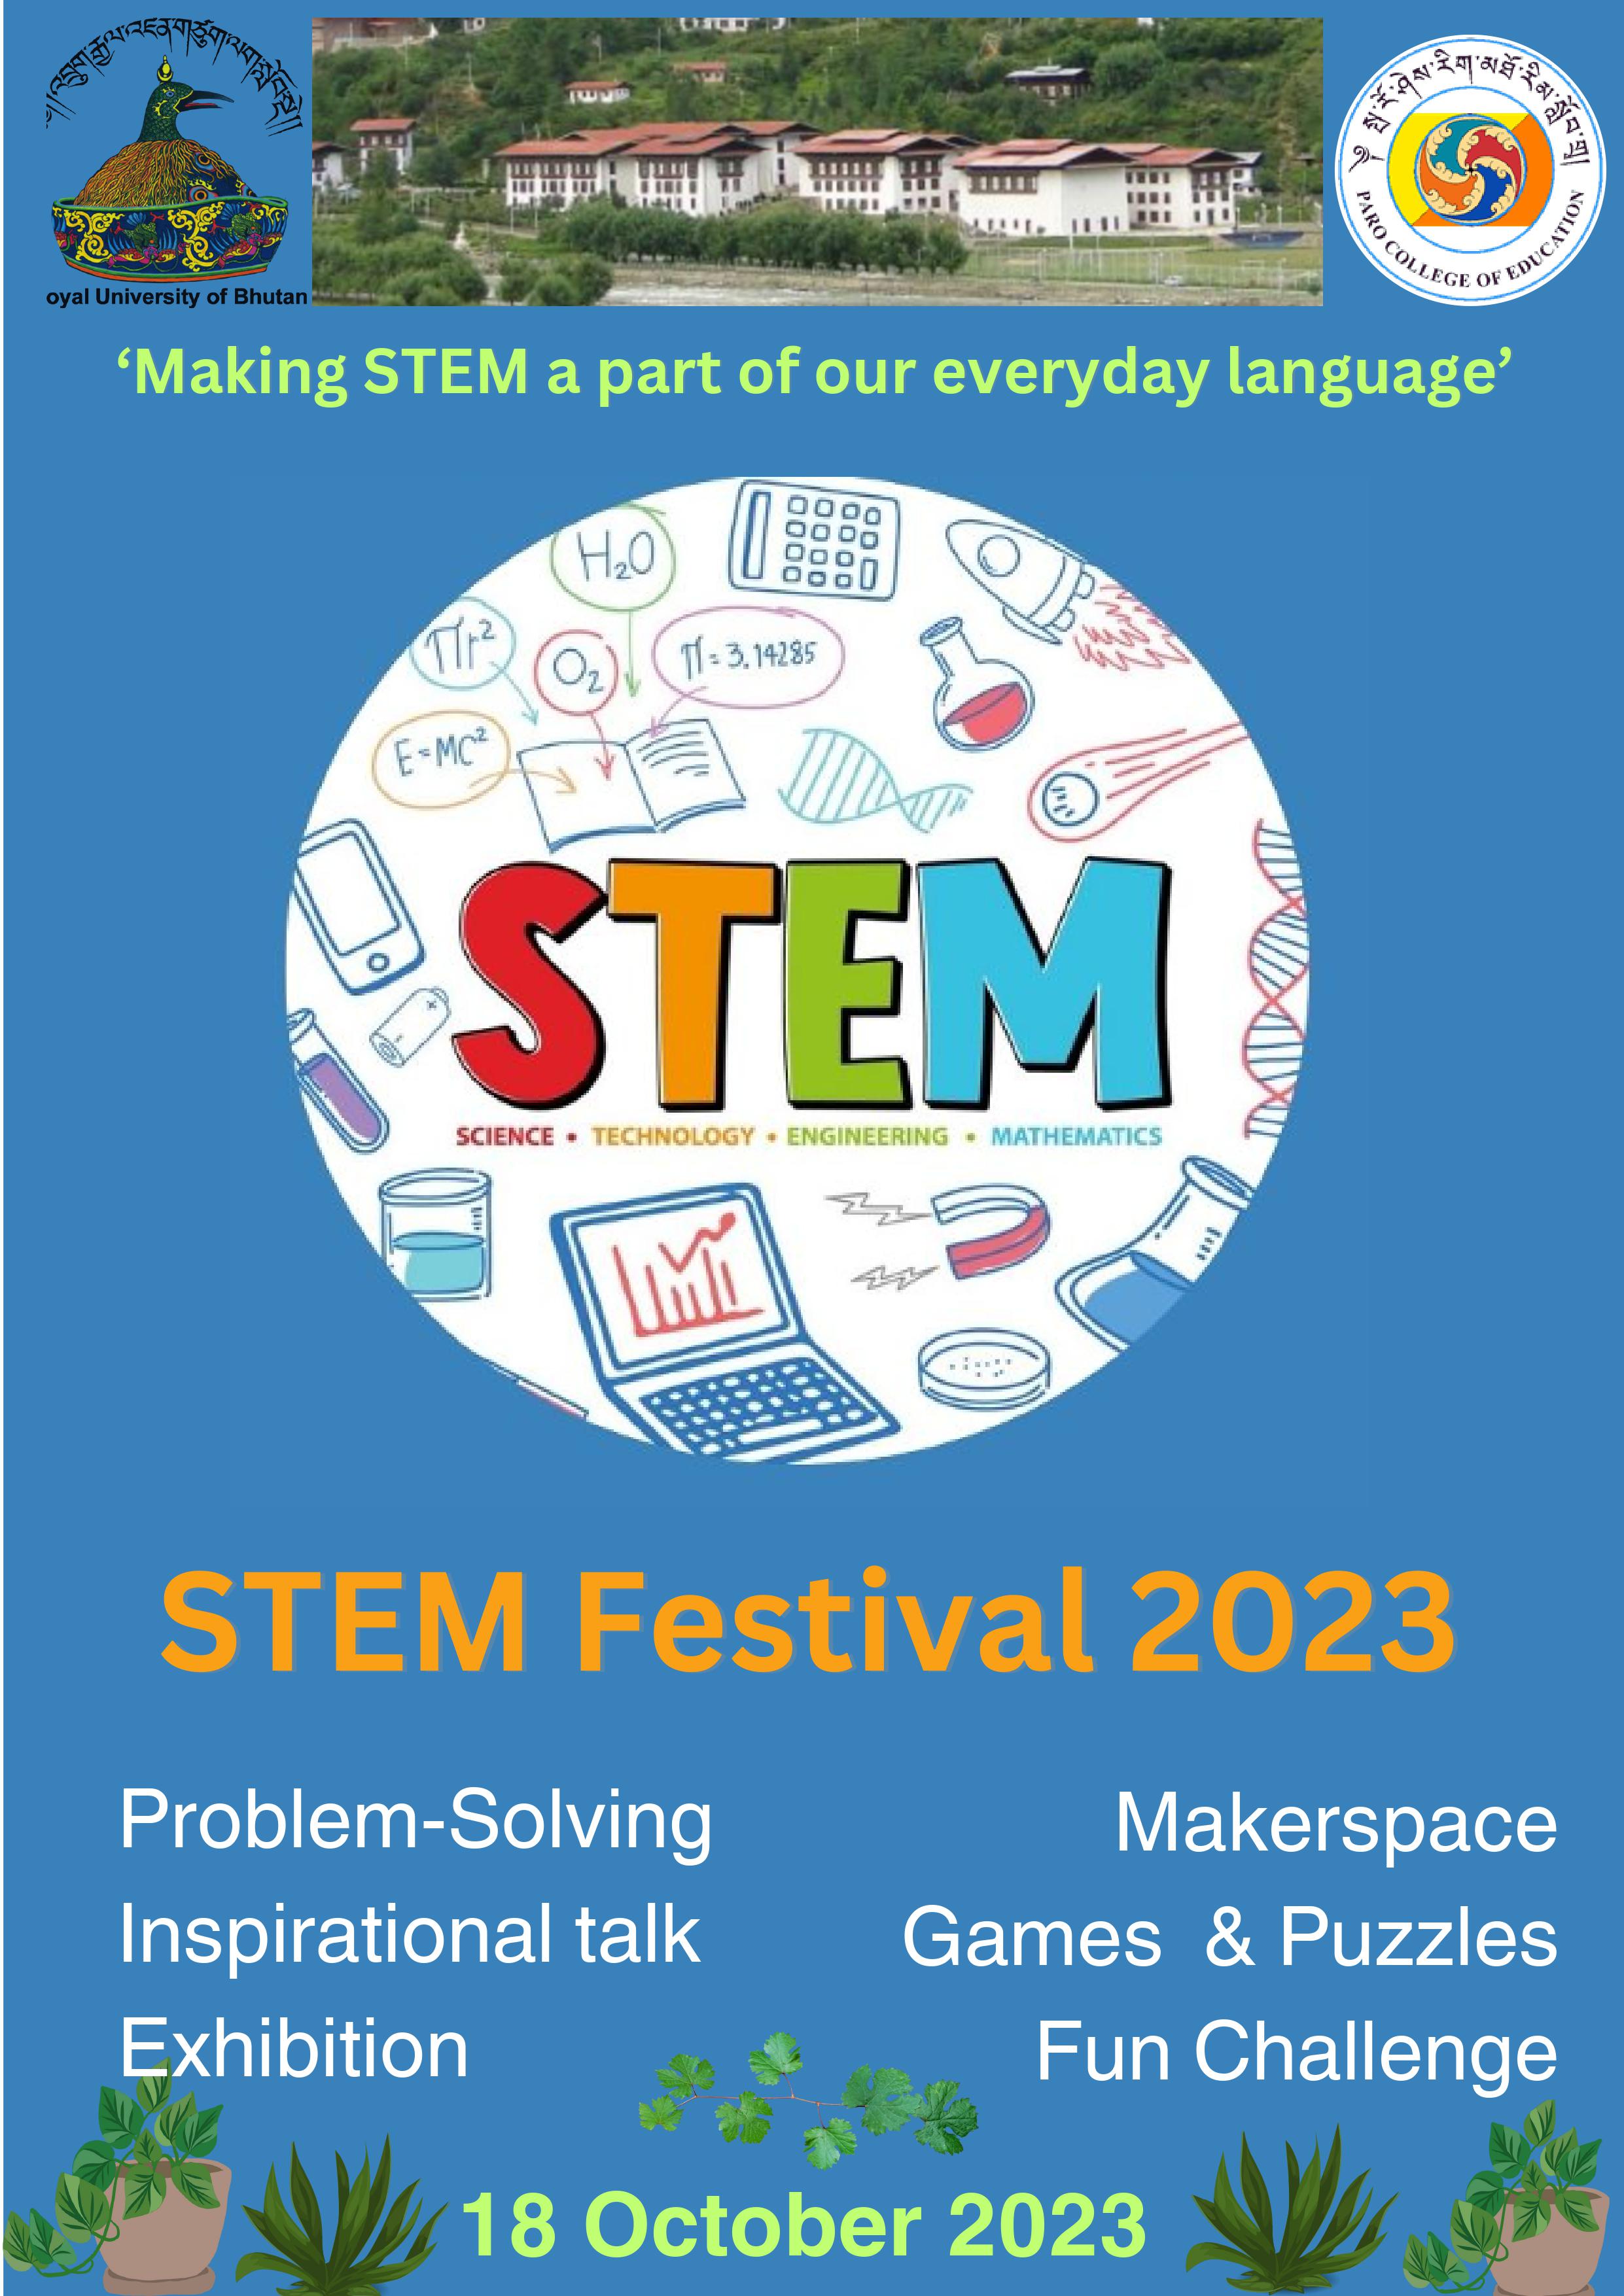 STEM Fest 2023